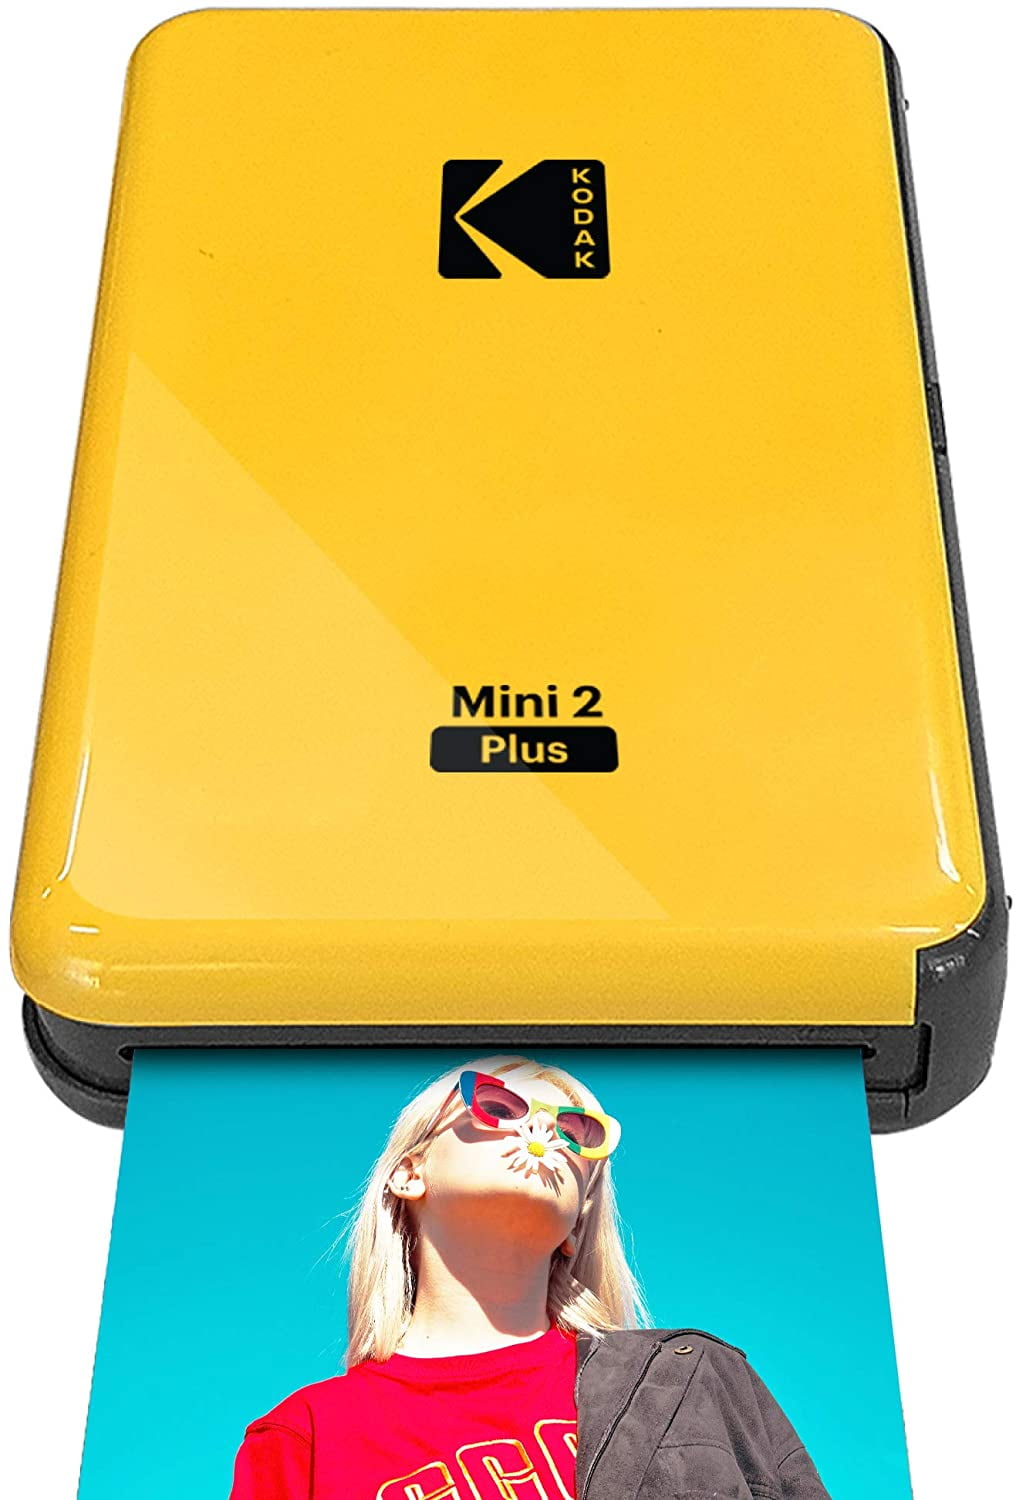 Alice vandring lån Kodak Mini 2 Plus | 2.1x3.4” Portable Wireless HD Photo Printer with 4PASS  (Yellow) - Walmart.com